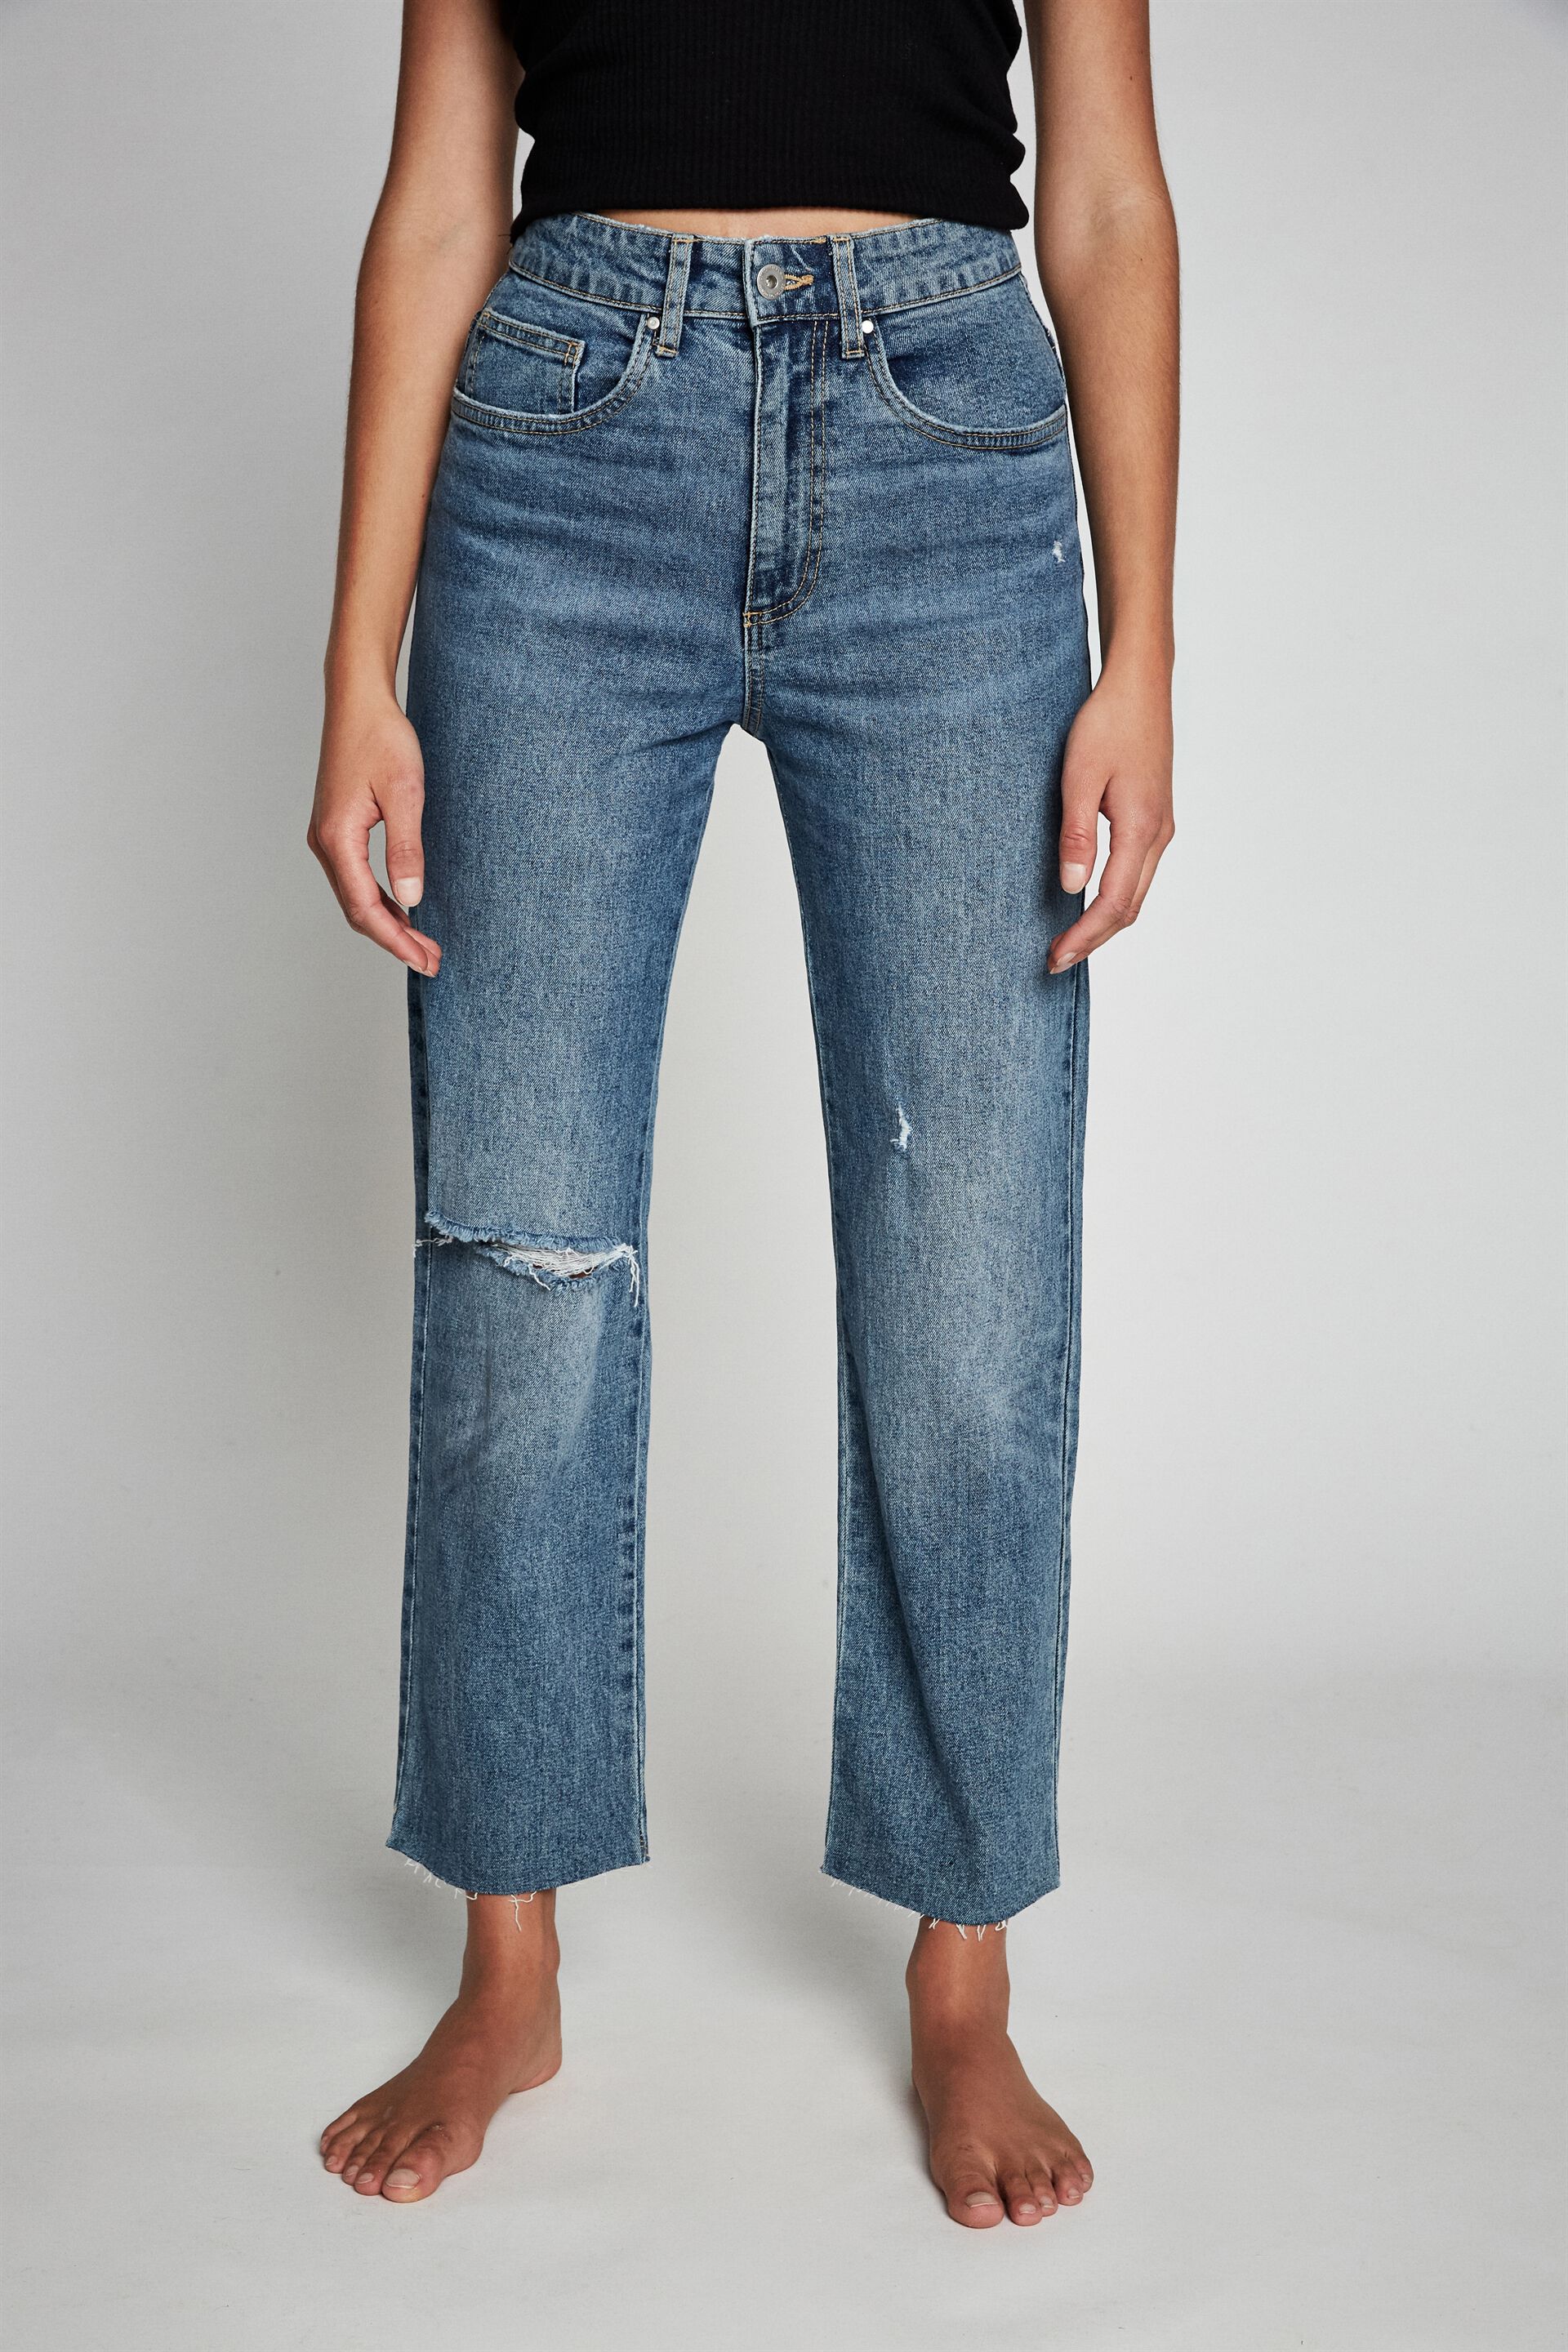 cotton on denim jeans